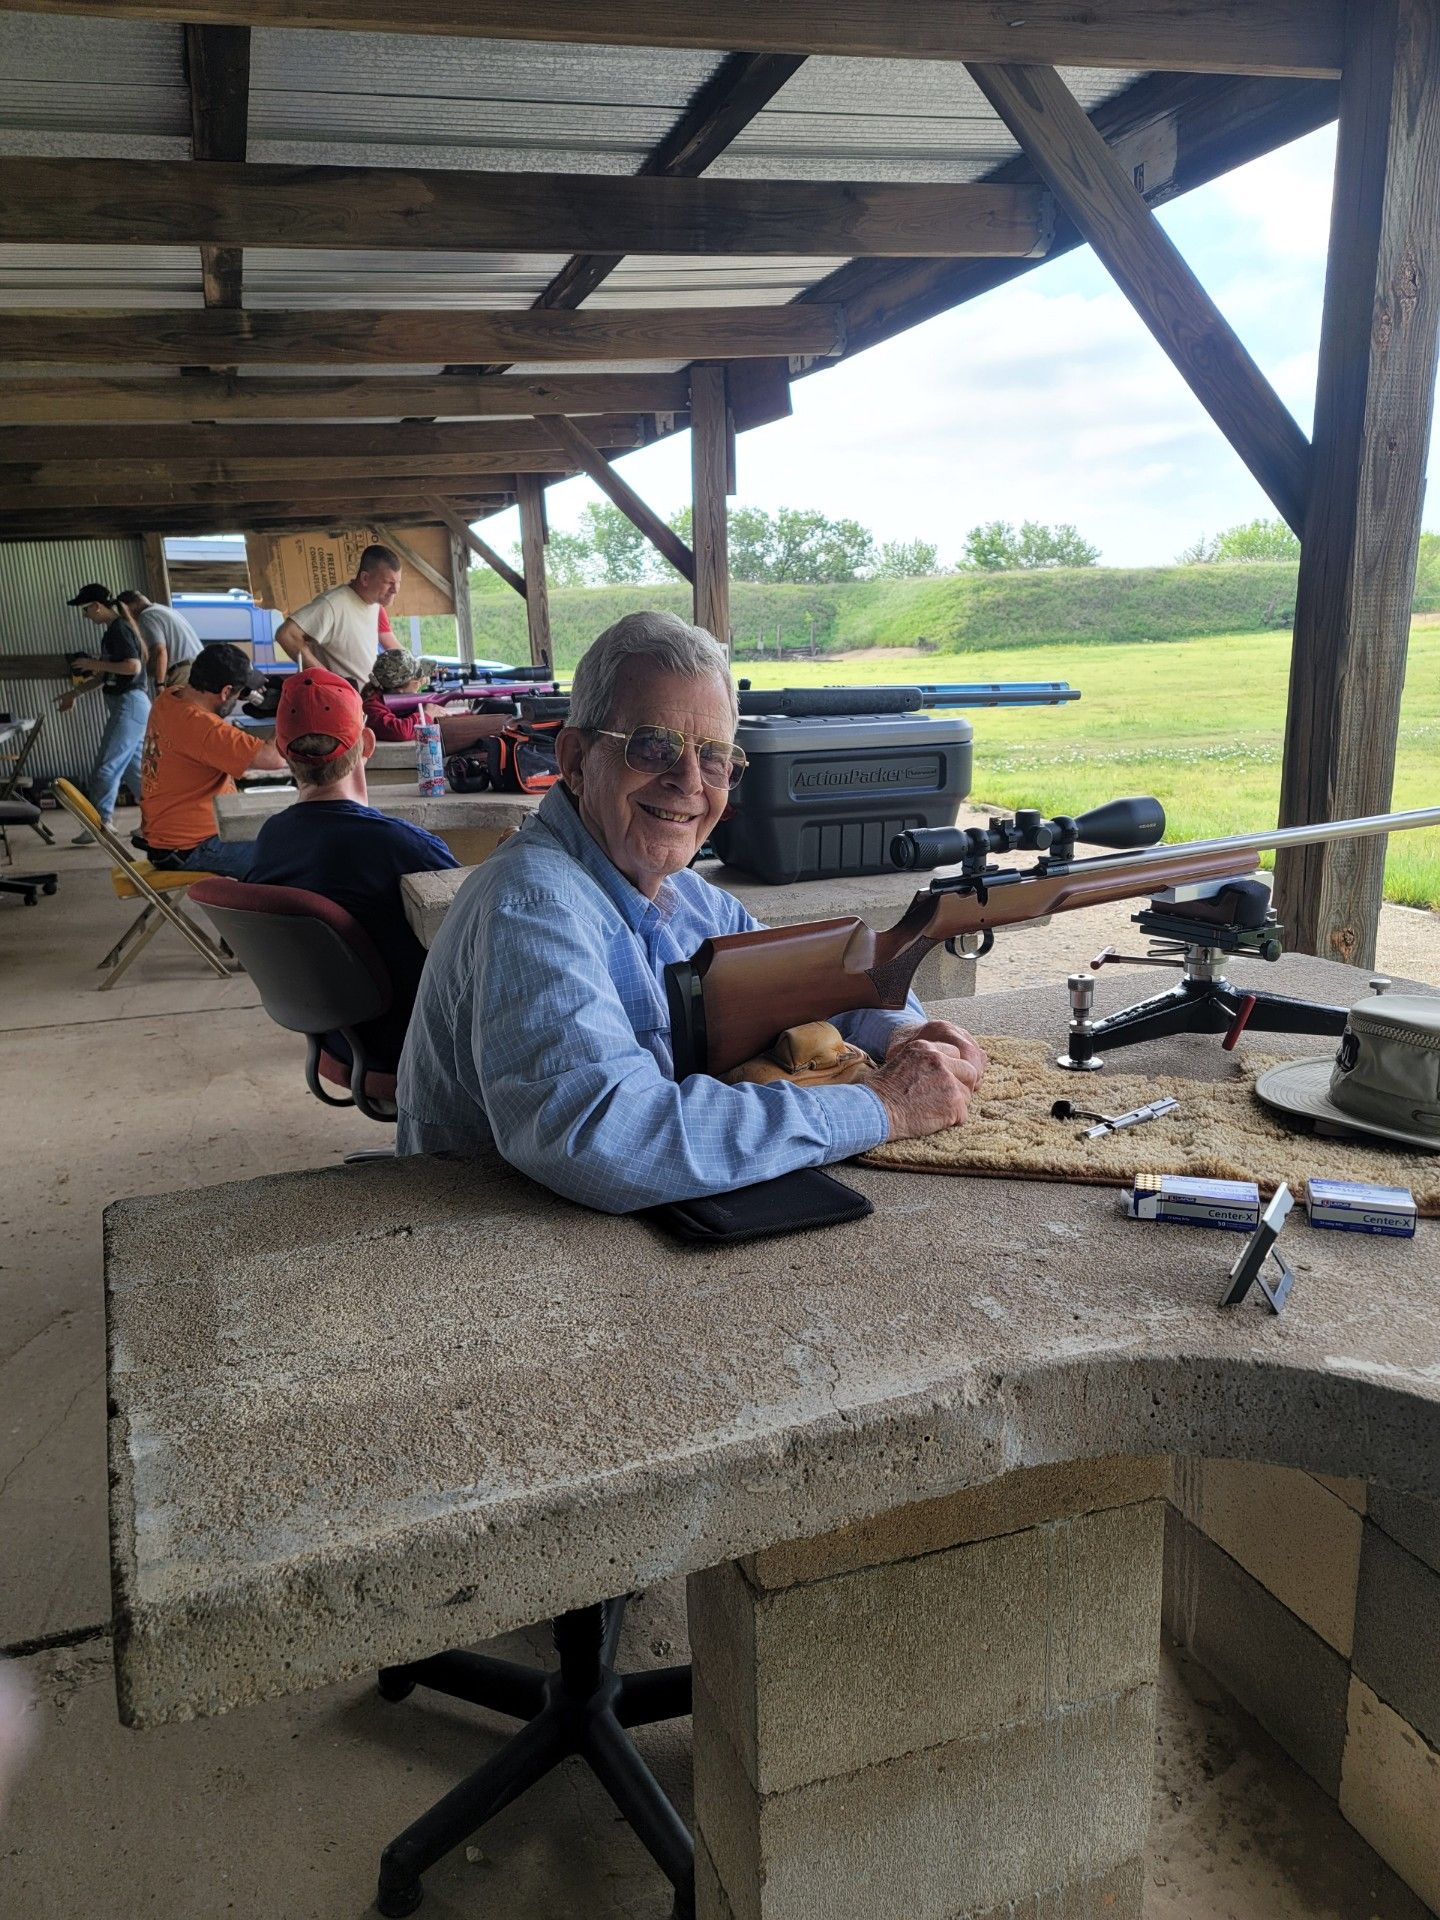 man in blue shirt and glasses smiling at camera sitting at gun range table next to rifle